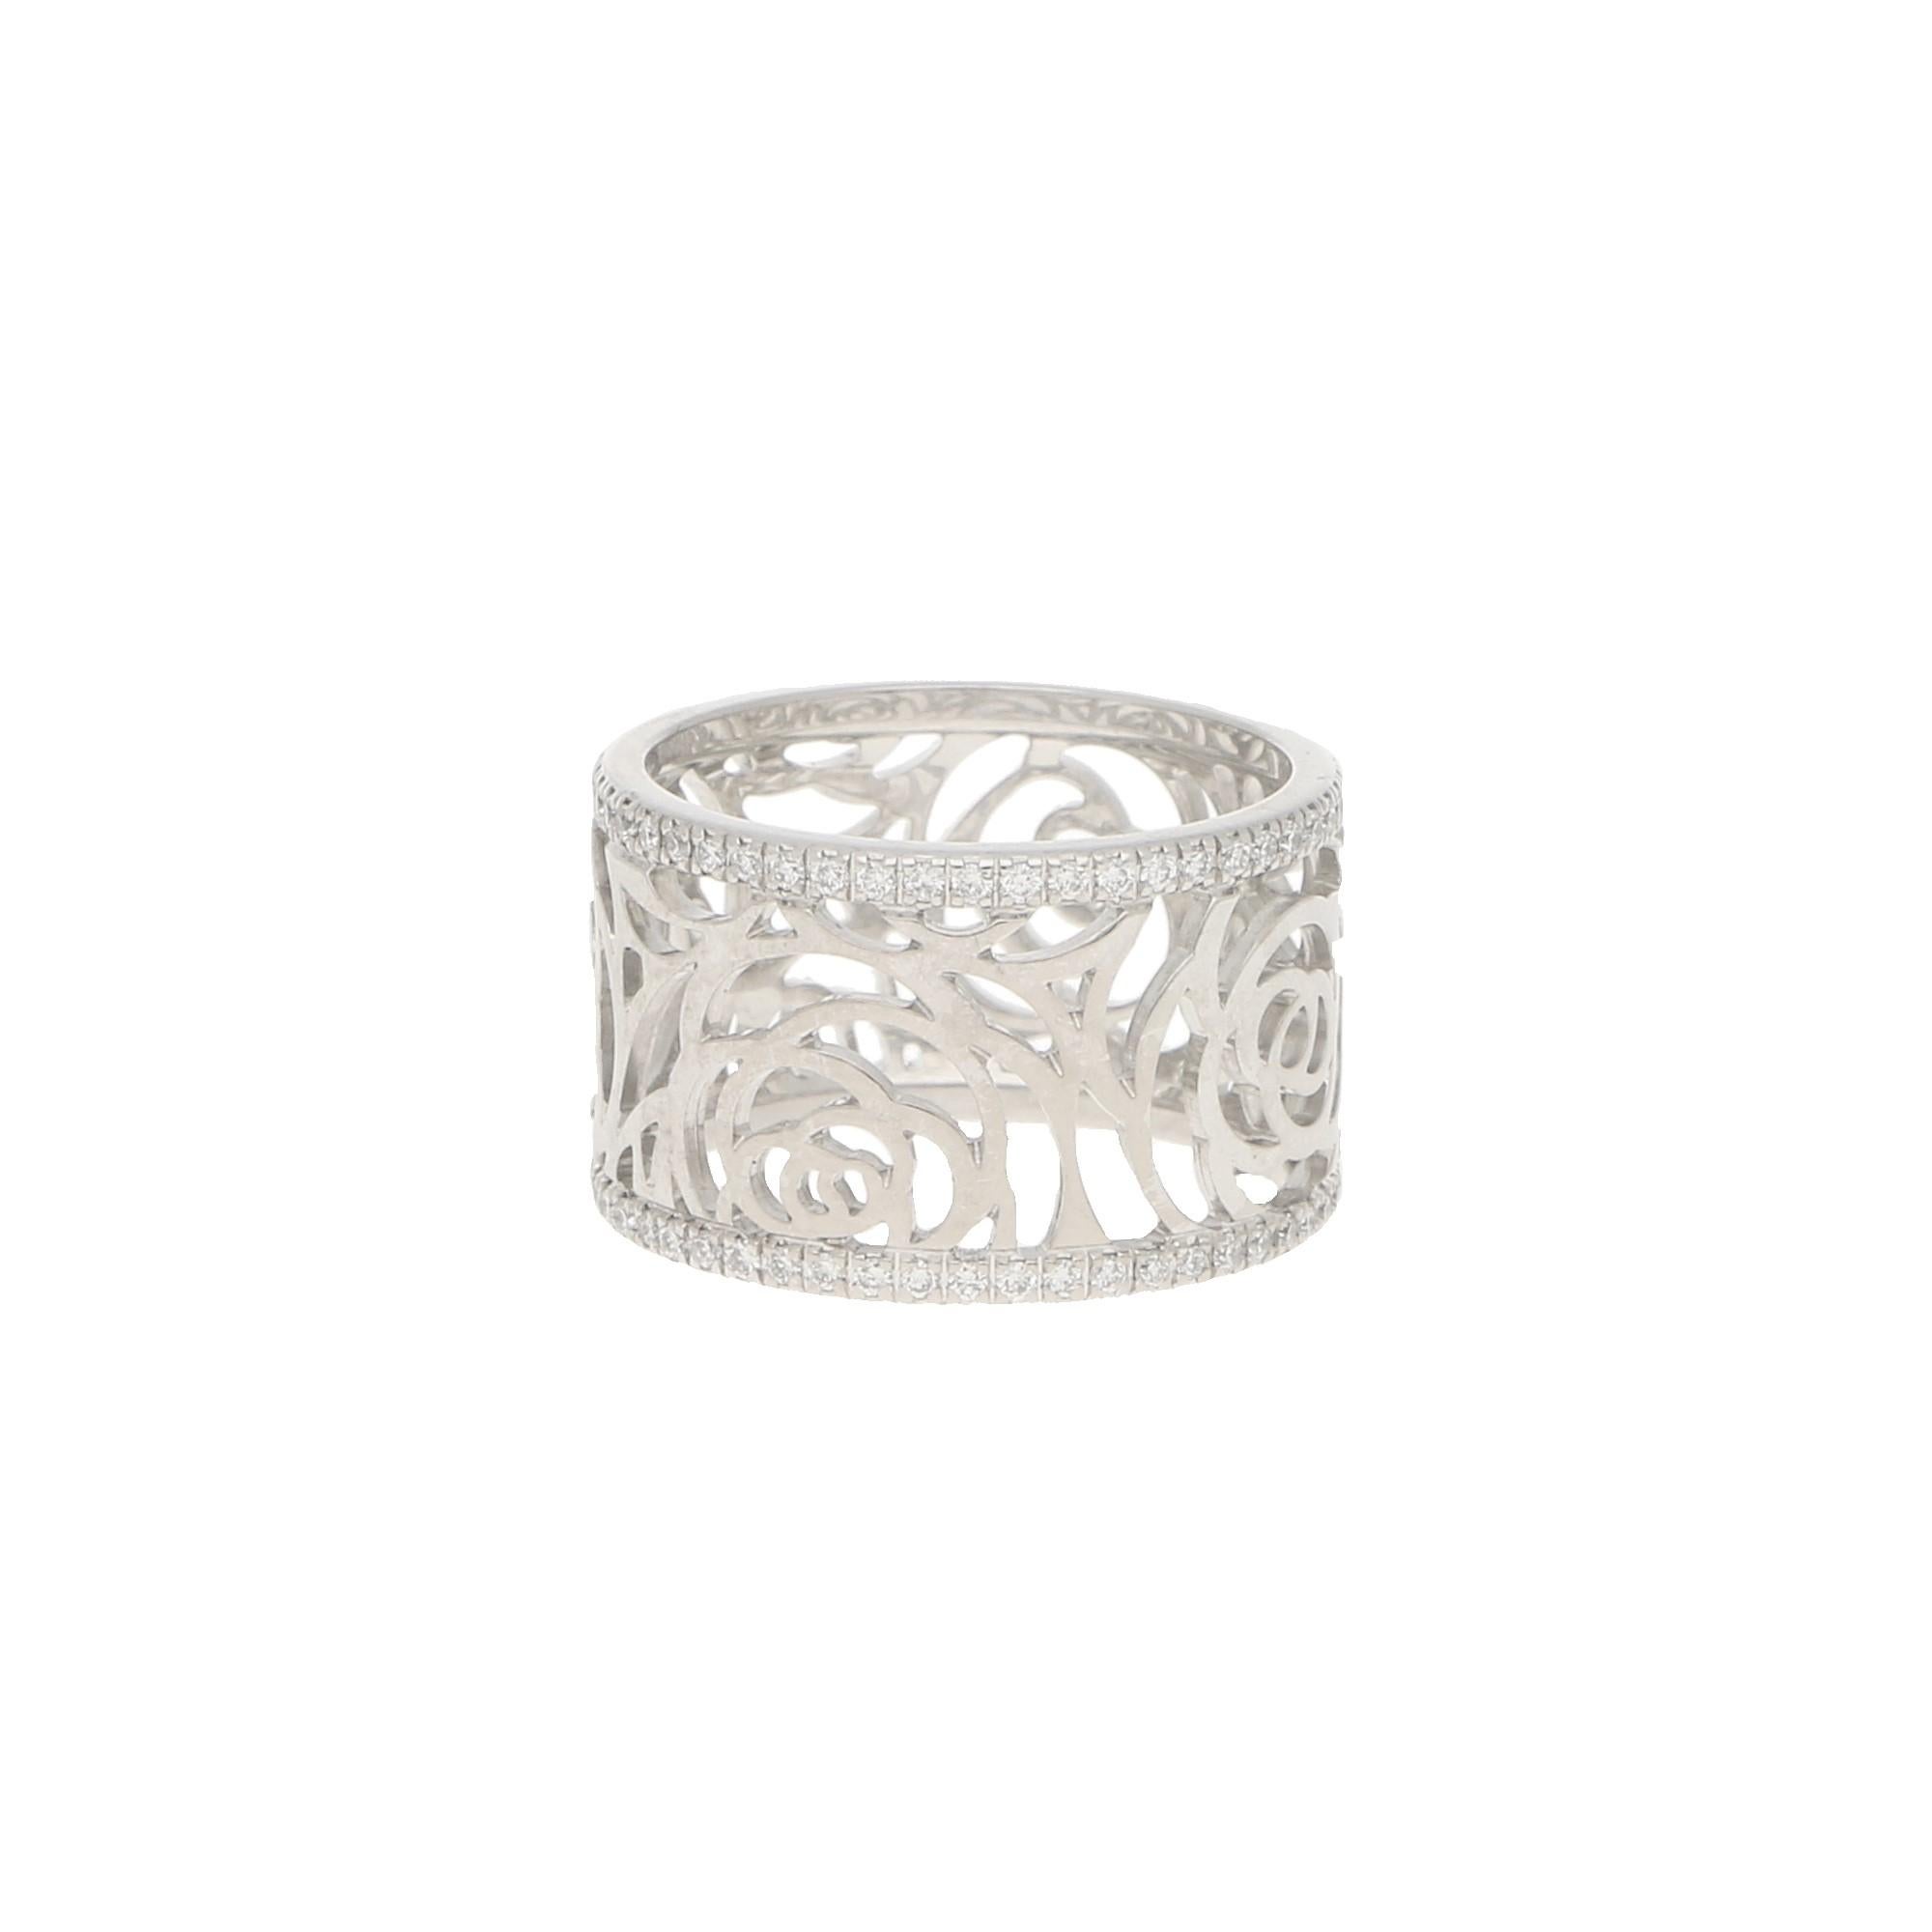 Modern Chanel Camélia Ajoure Diamond Eternity Band Ring Set in 18 Karat White Gold